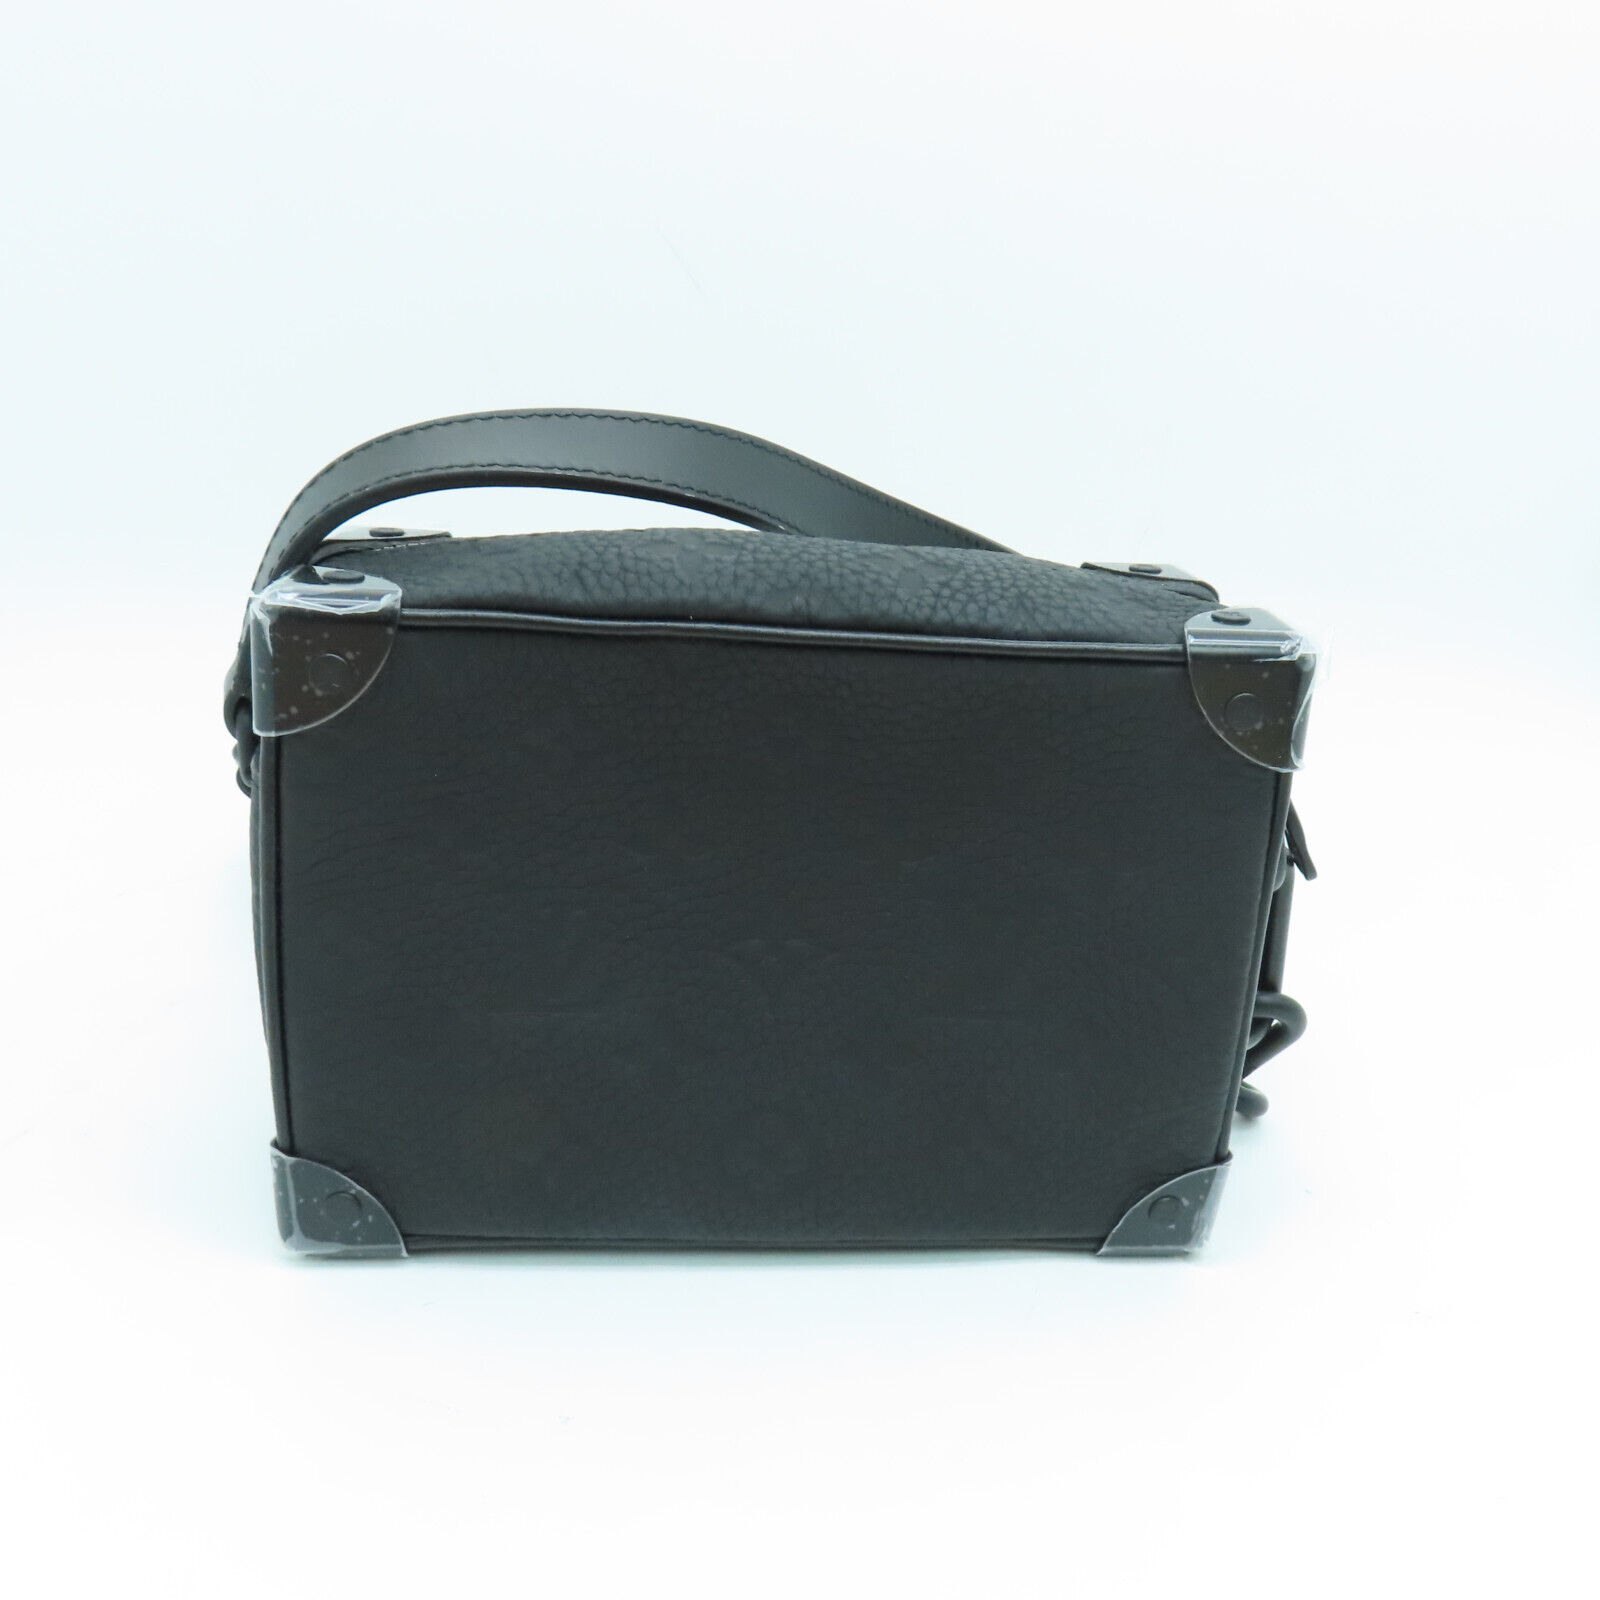 Shop Louis Vuitton MONOGRAM Mini soft trunk (M55702) by Bellaris